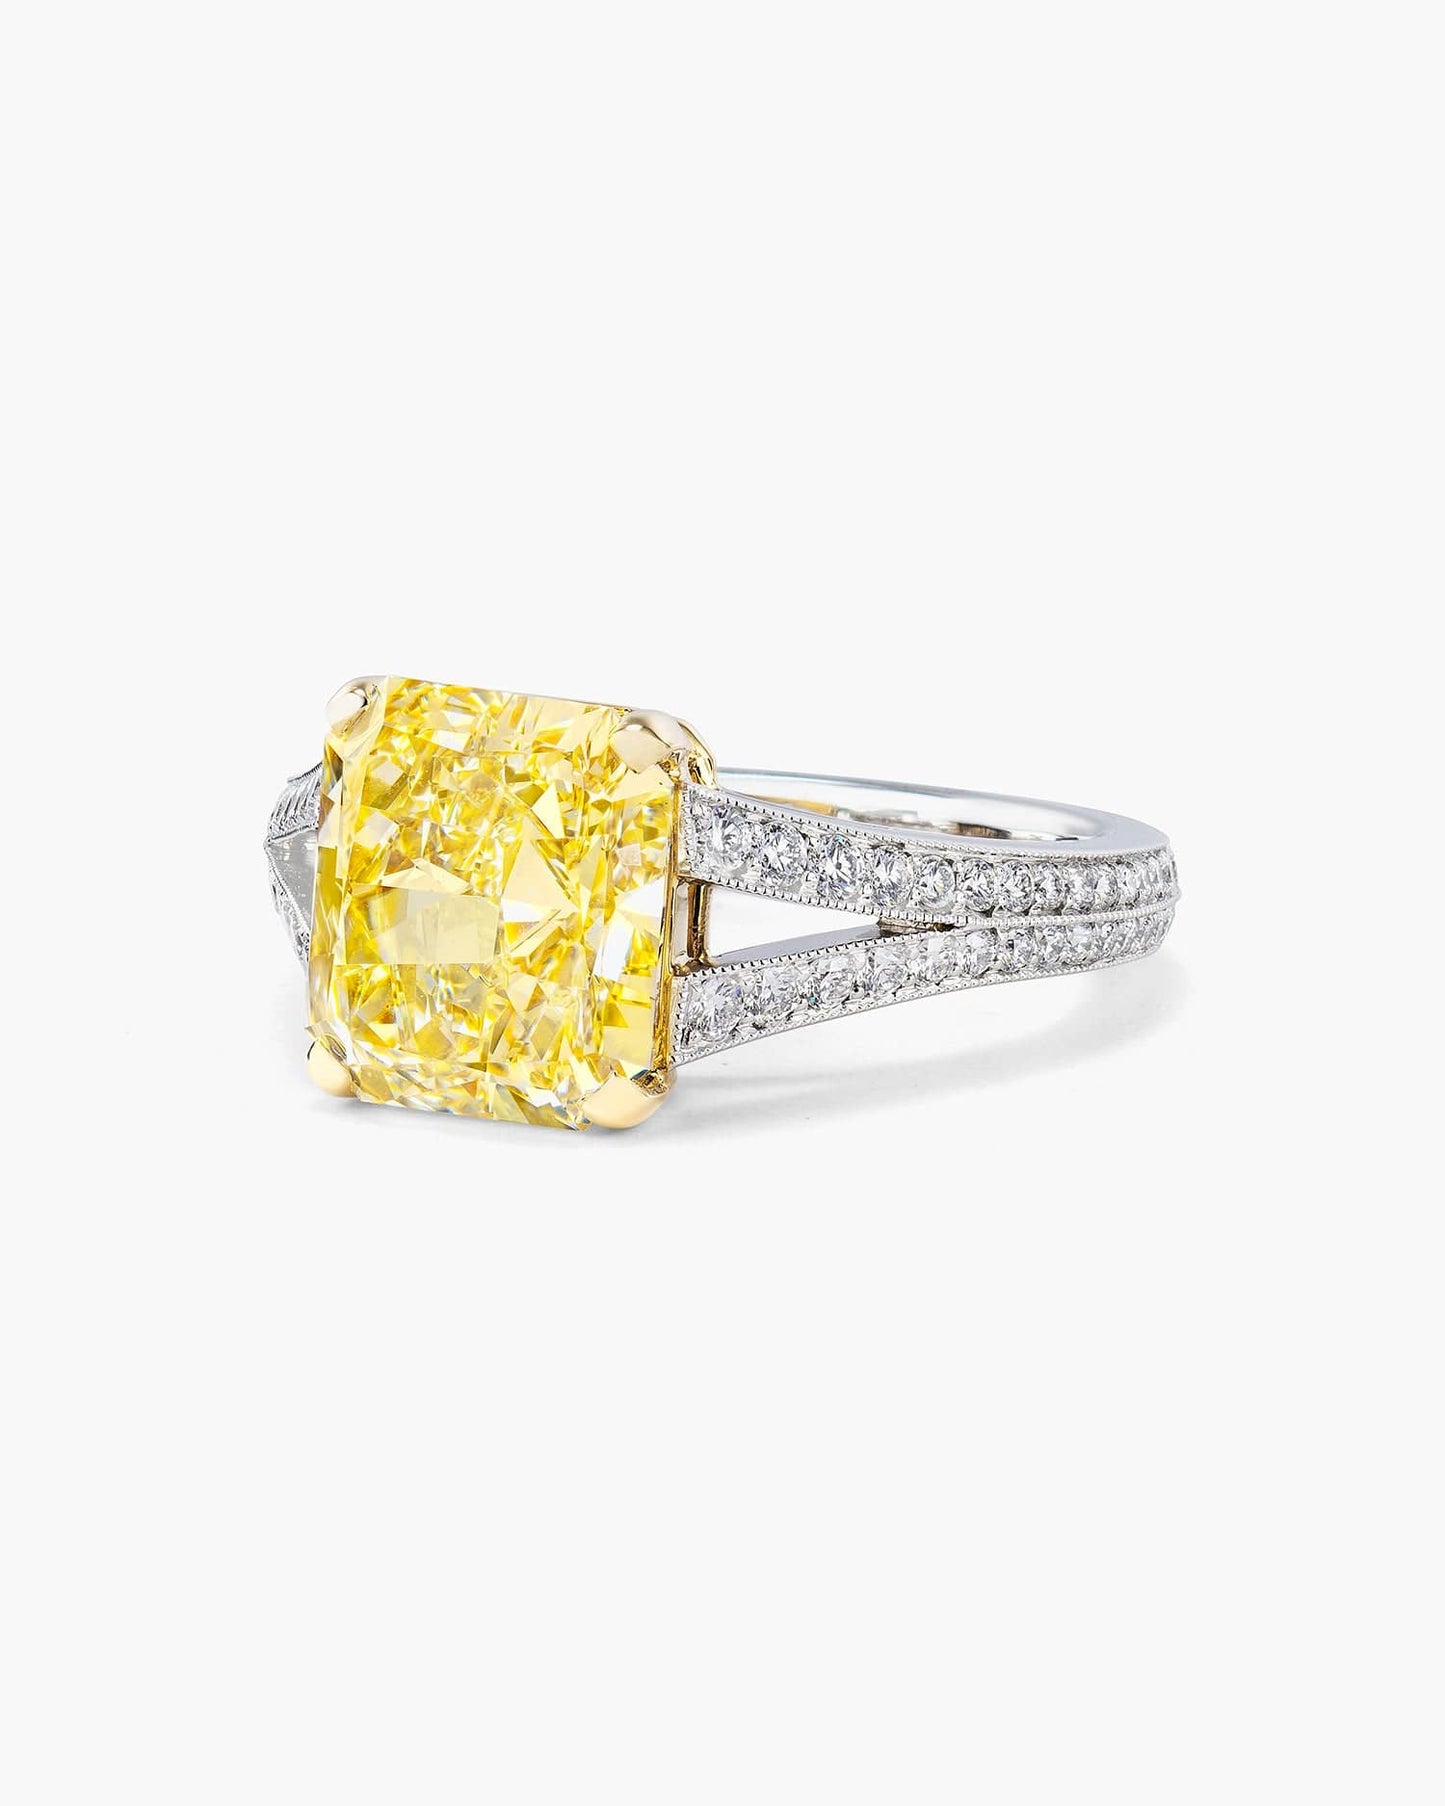 3.48 carat Radiant Cut Yellow and White Diamond Ring